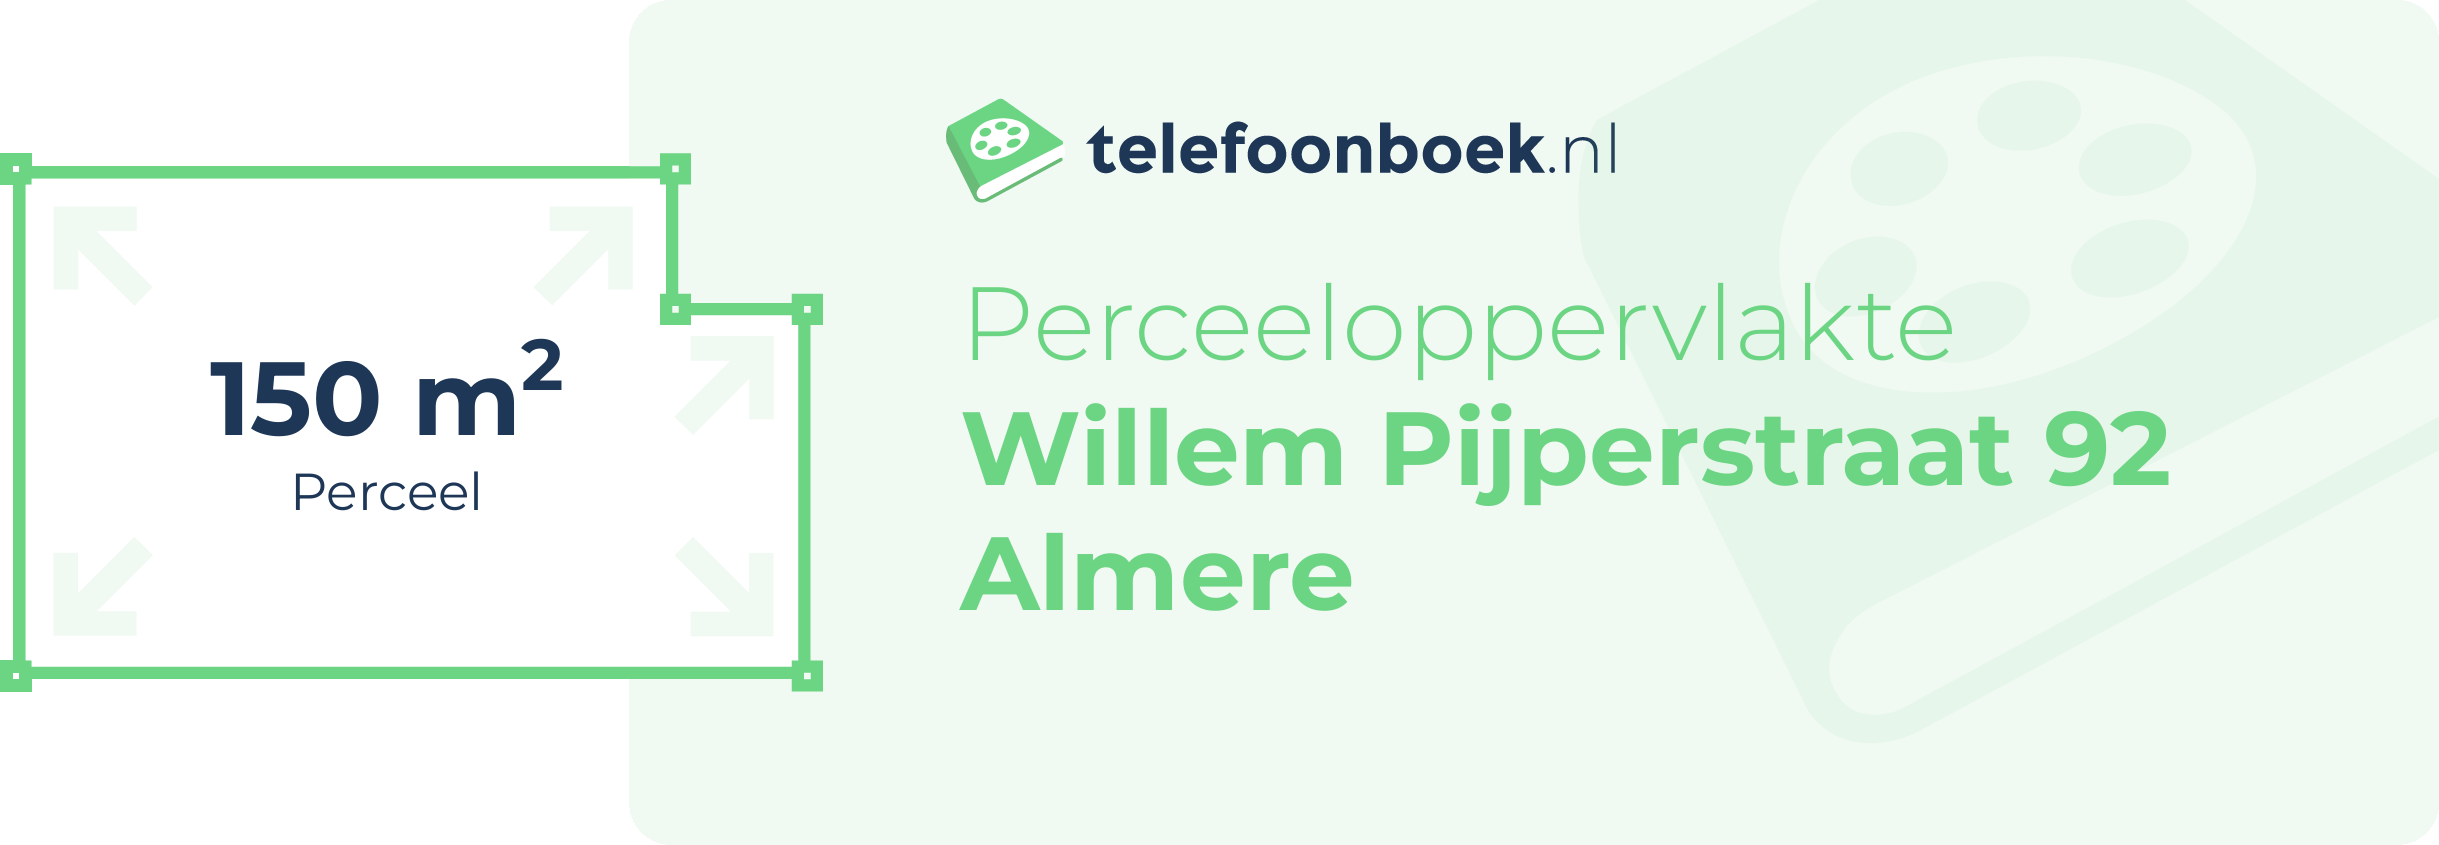 Perceeloppervlakte Willem Pijperstraat 92 Almere